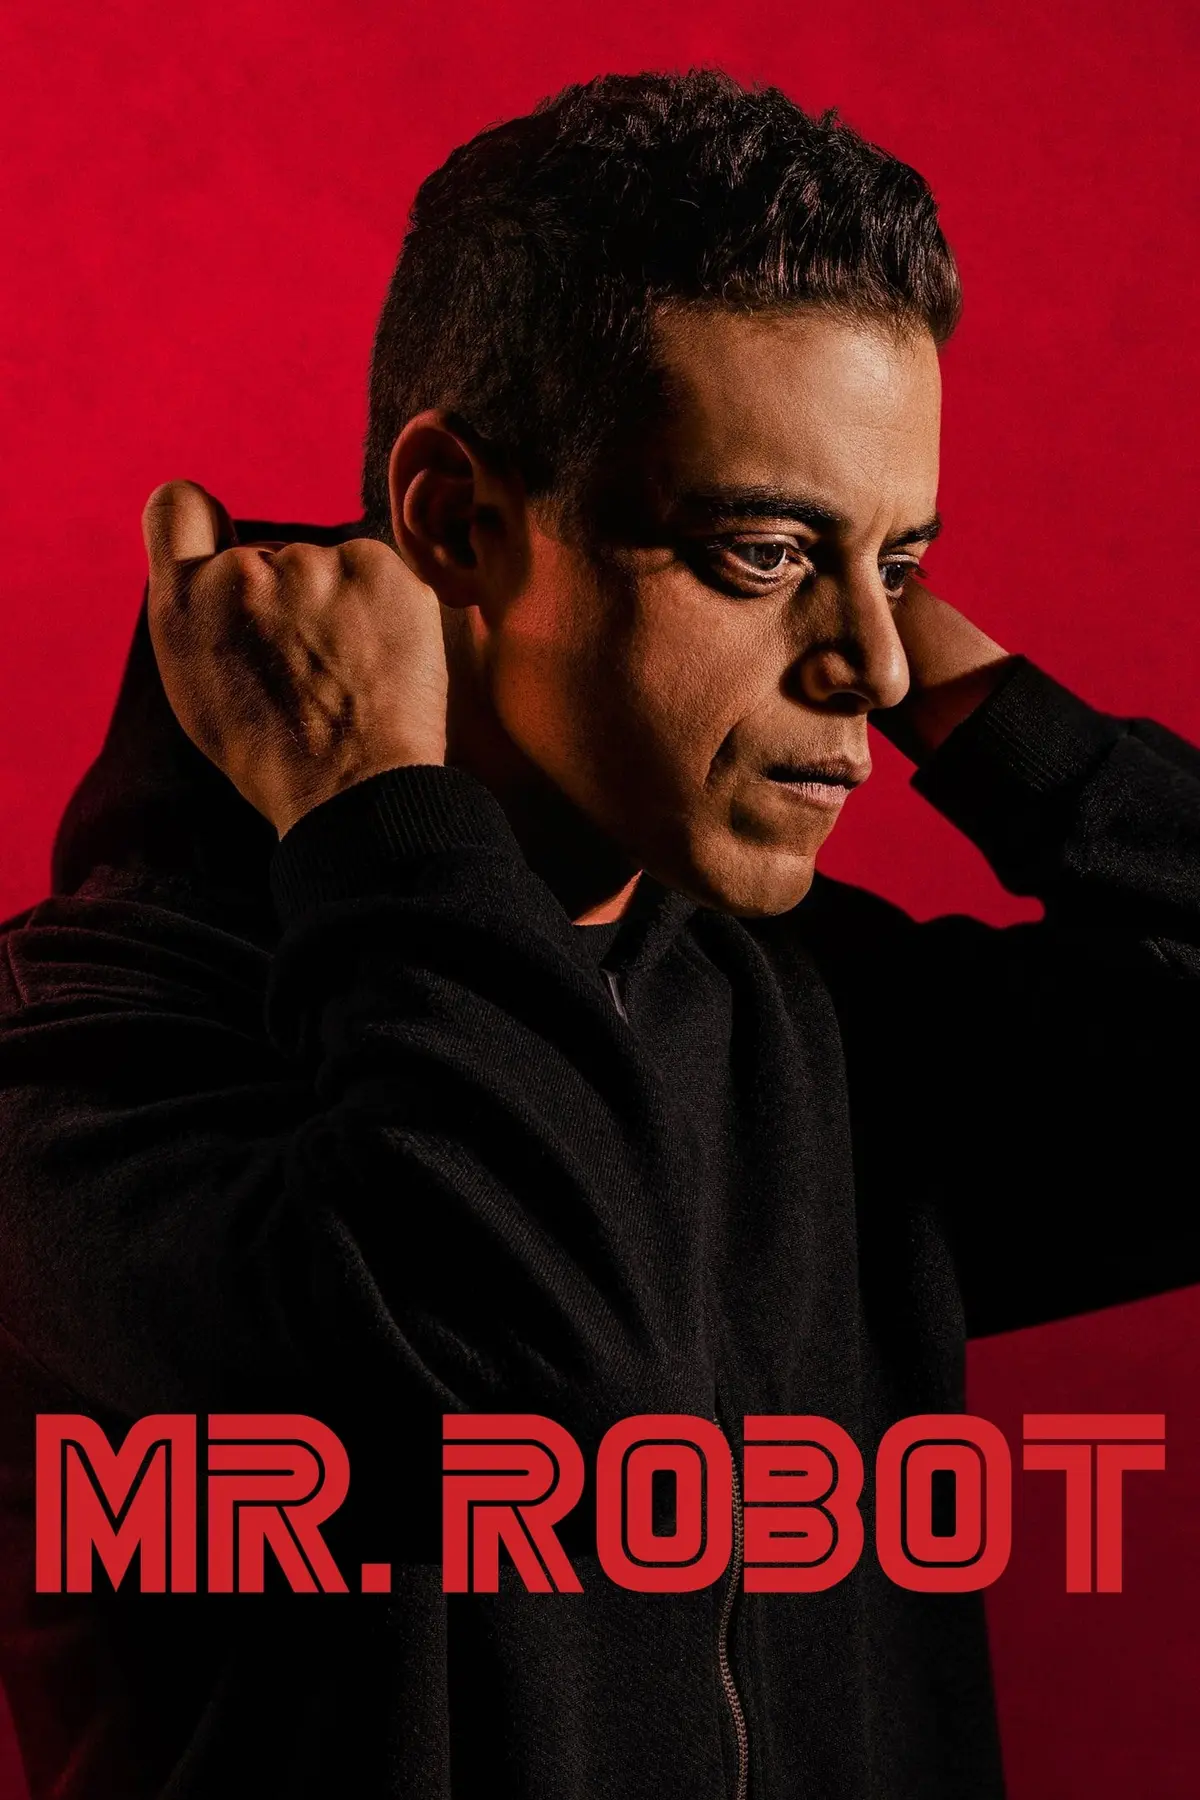 Mr. Robot S01E05 3xp10its.wmv